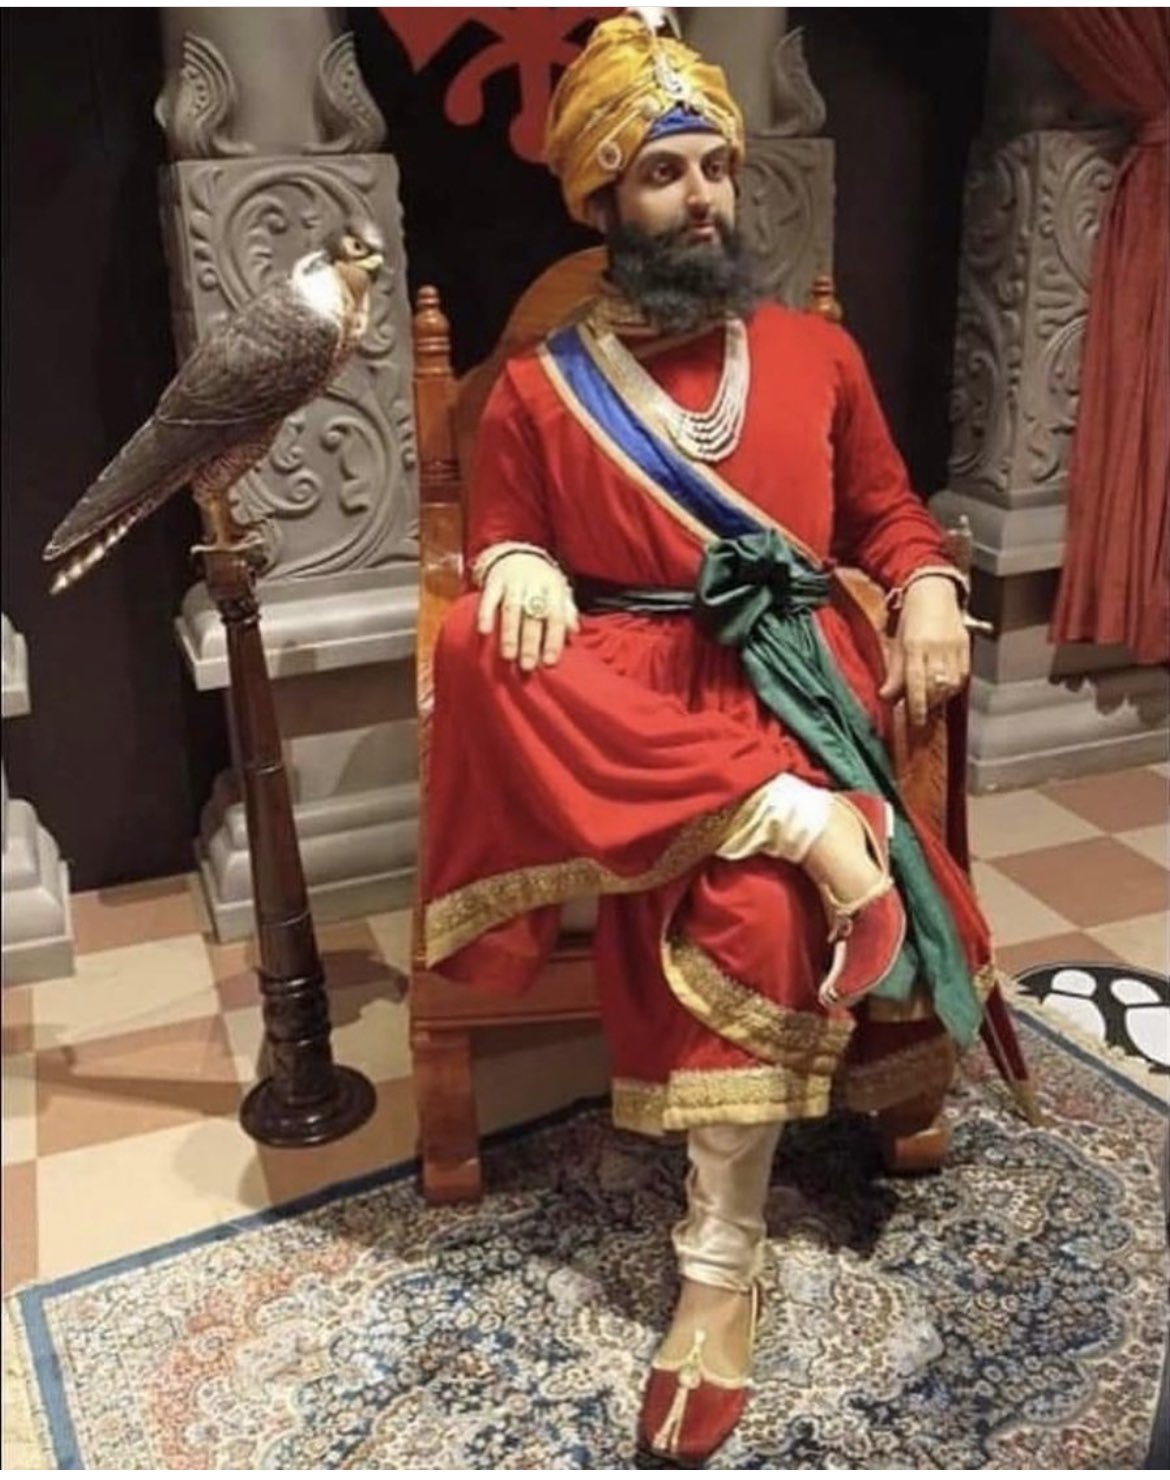 Placing statue of Sri Guru Gobind Singh inside mall at Patna Sahib is against Sikh principles: SGPC